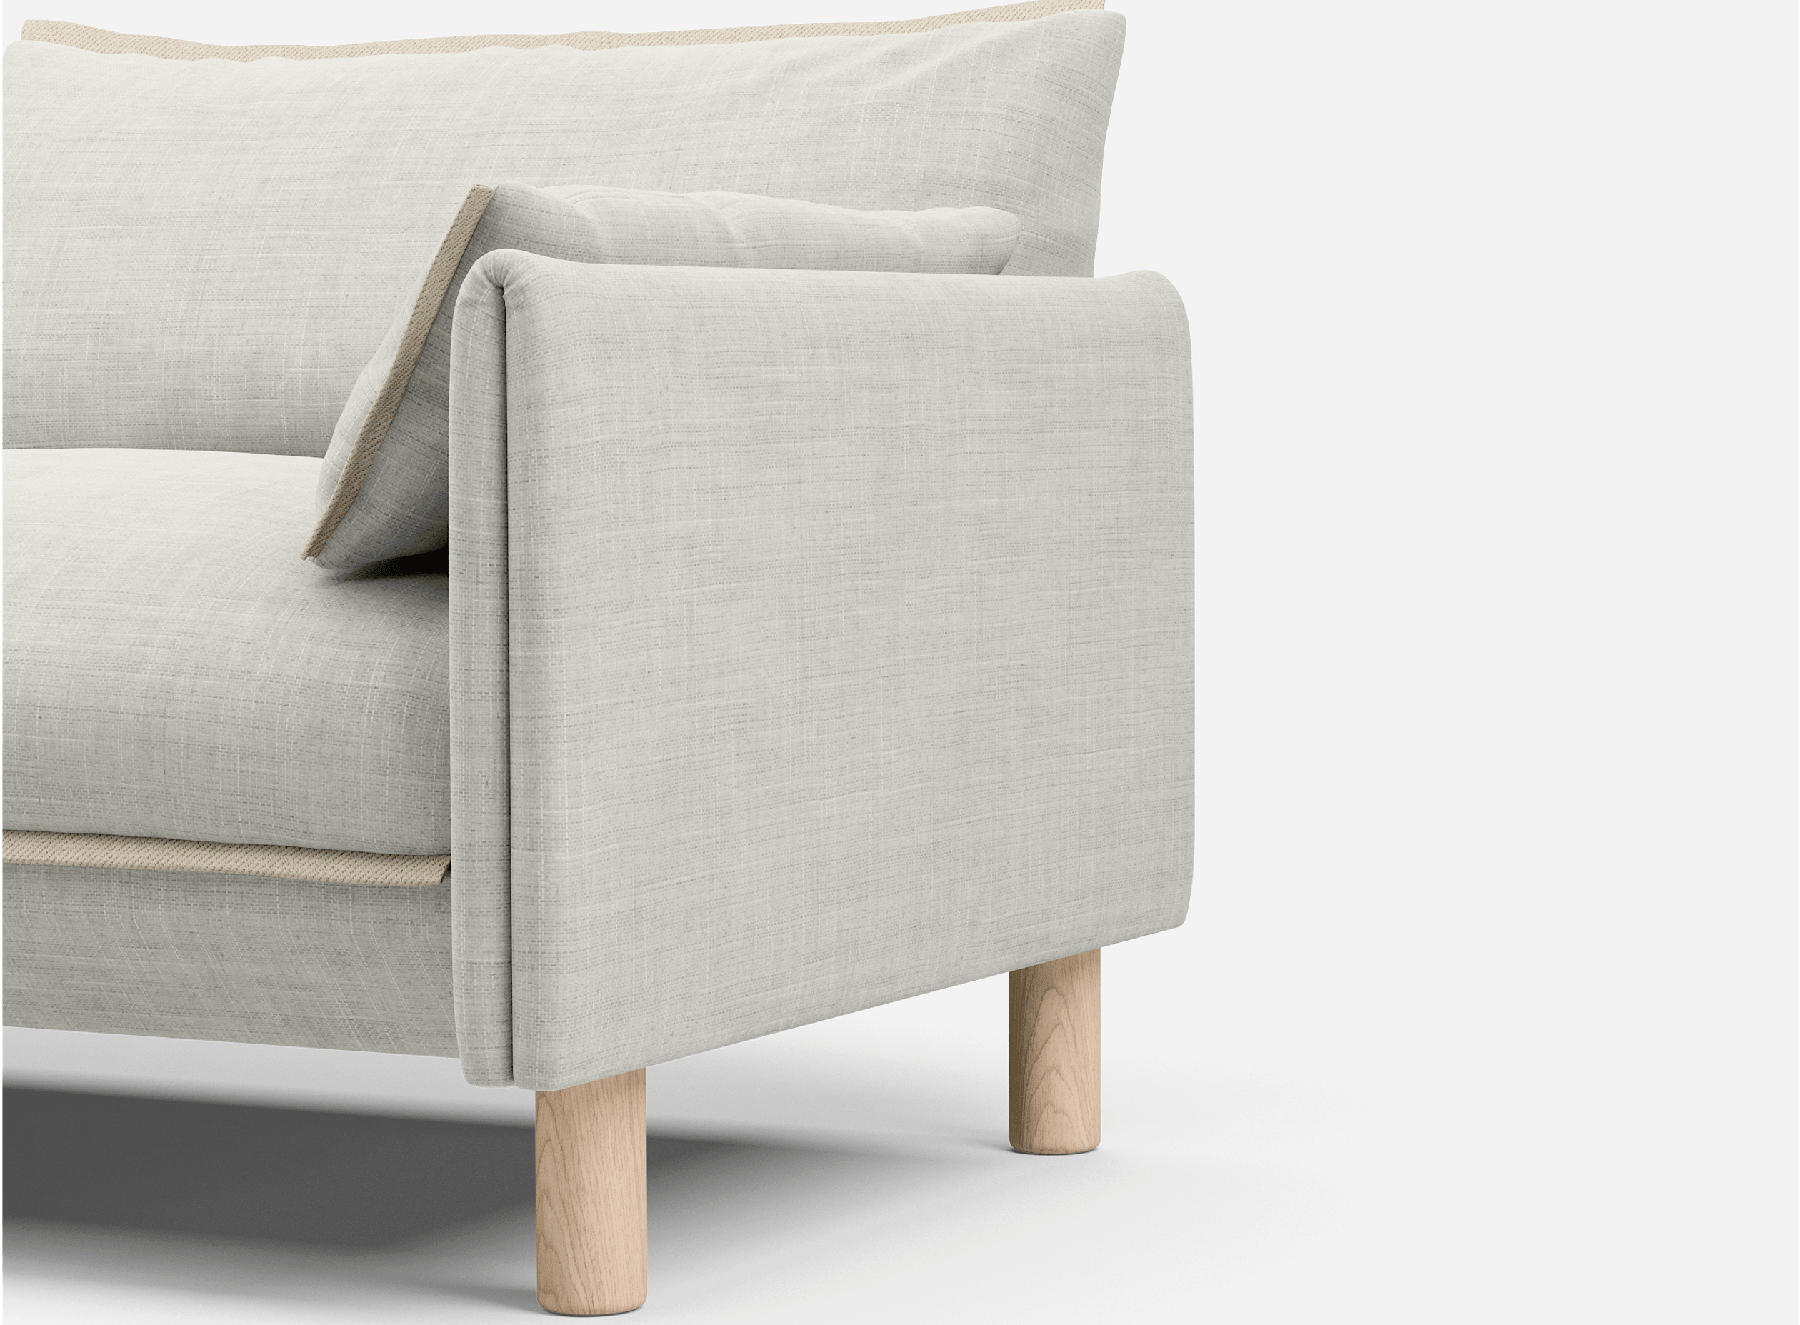 3 seater cozmo sofa weave ecru with weave ecru jacket front angled view @ Ecru Weave Jacket | Natural Trim